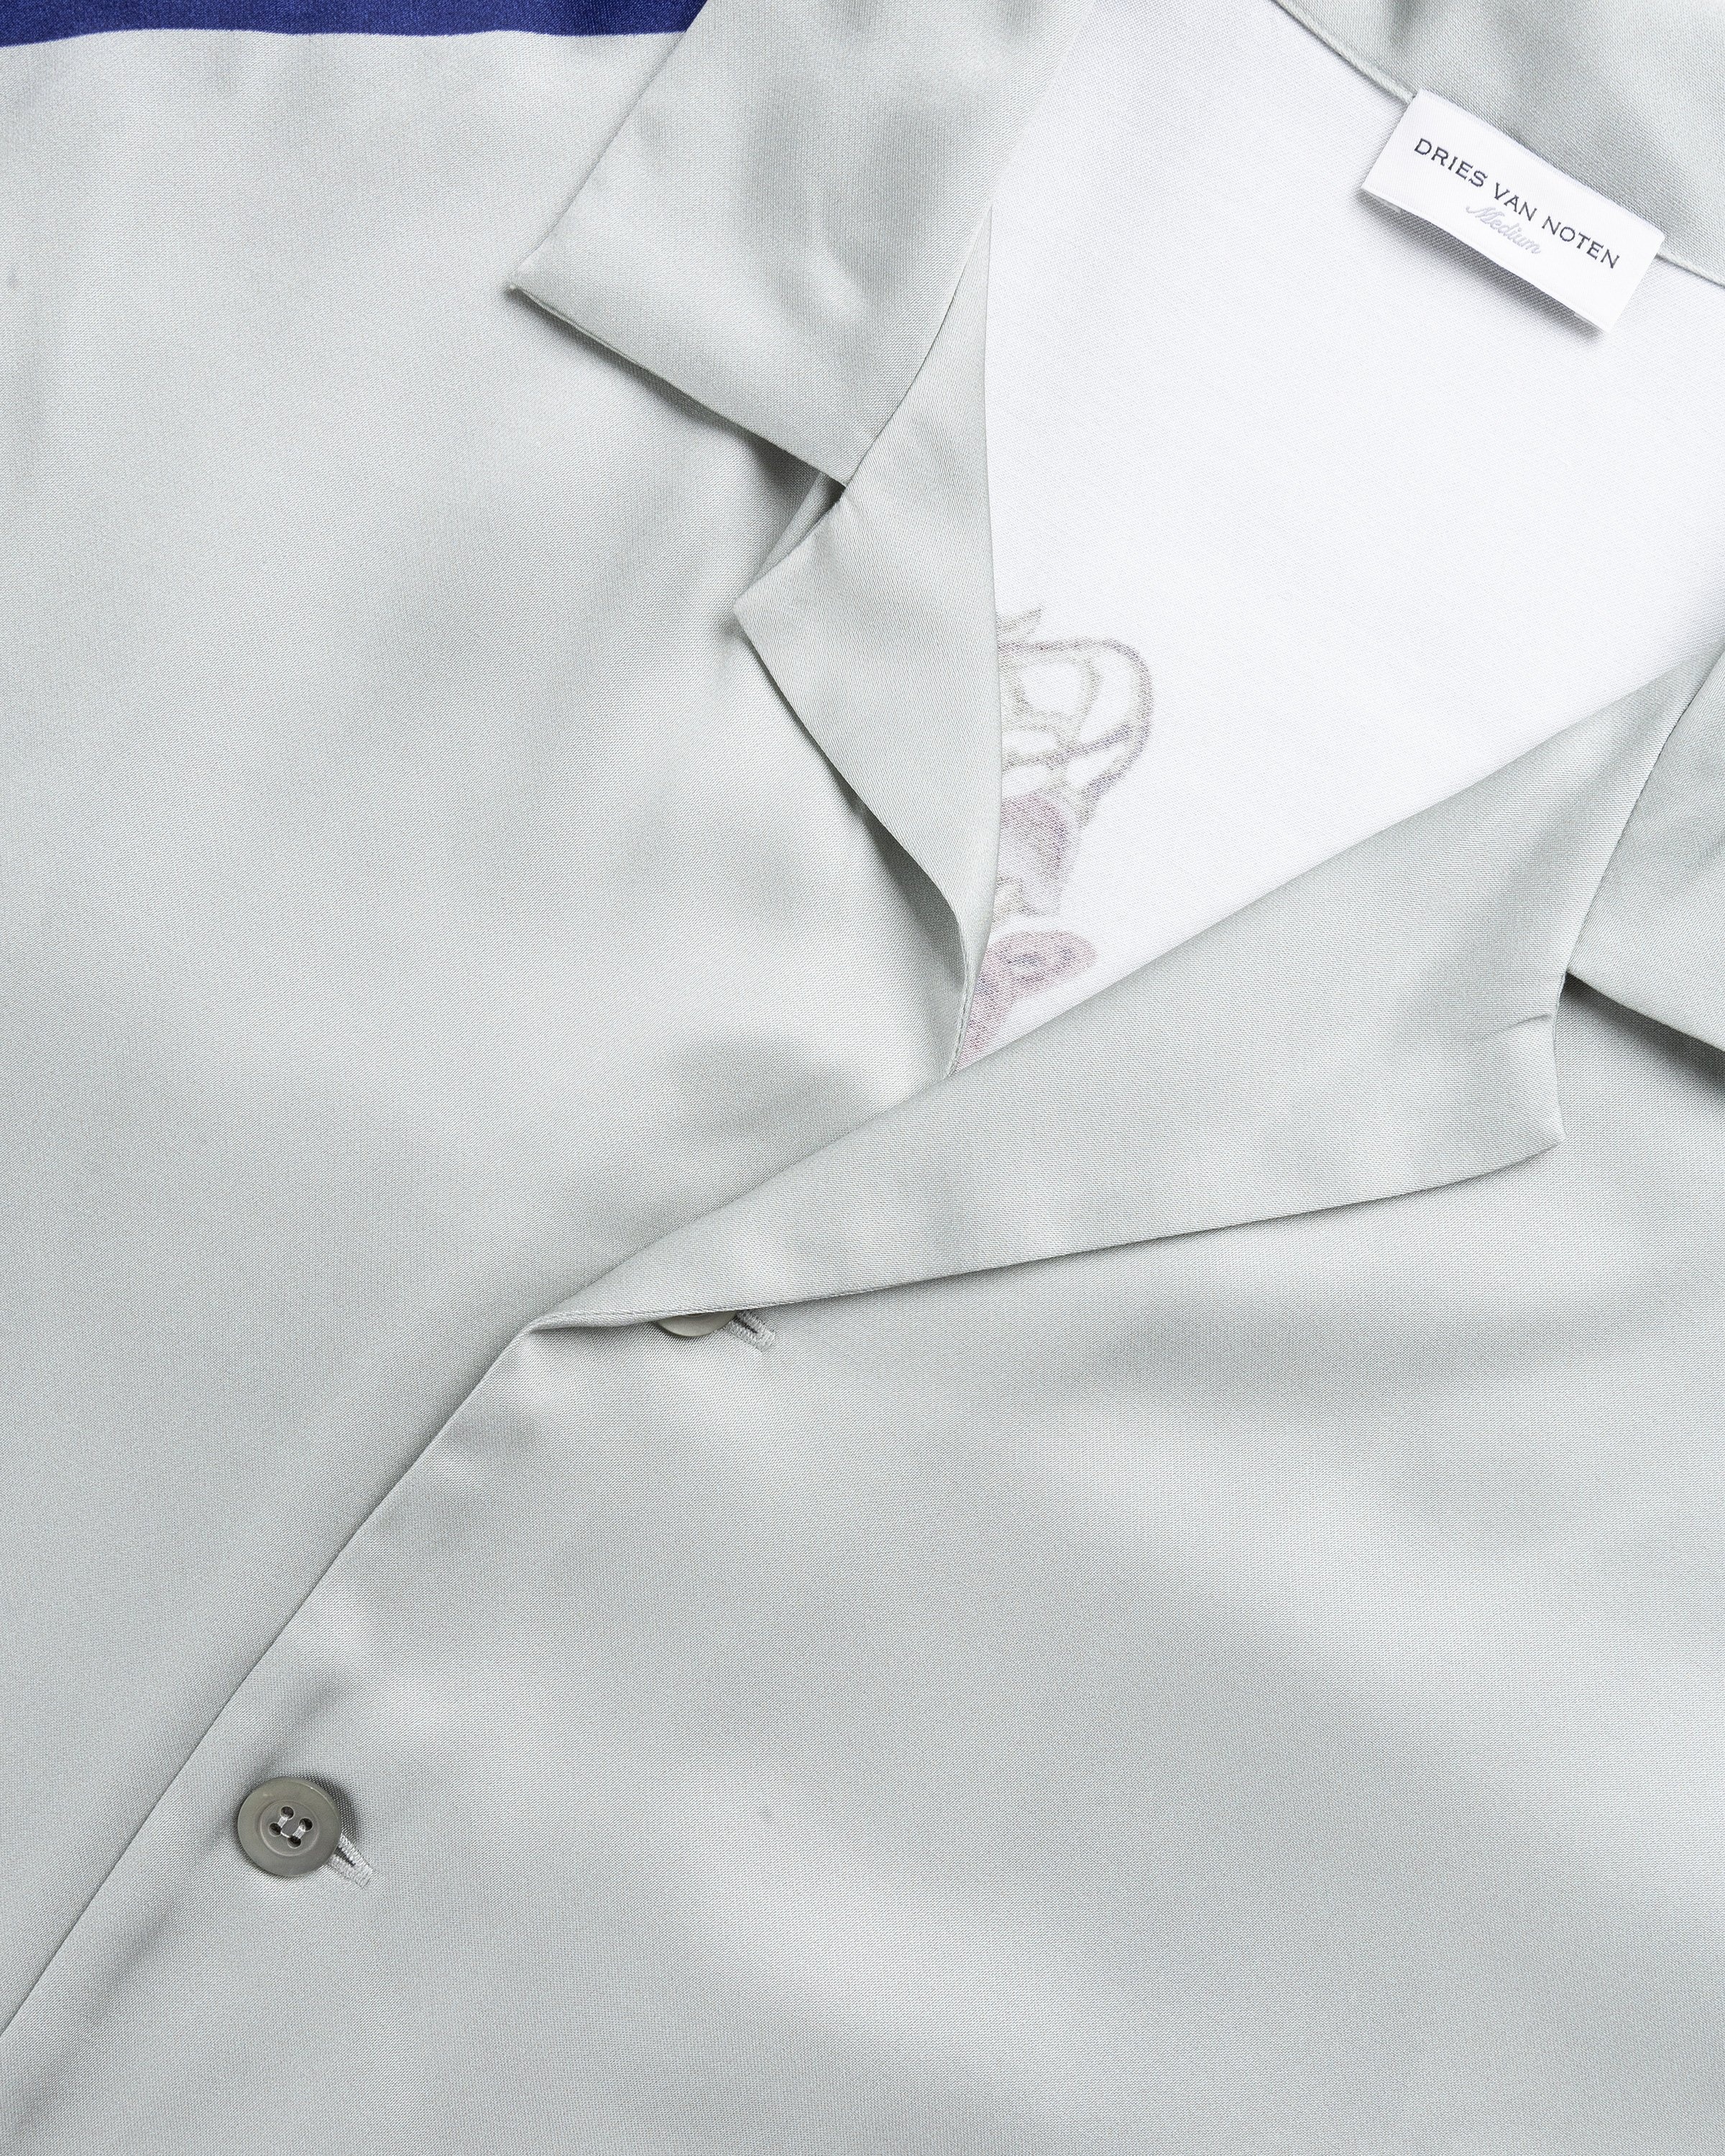 Dries van Noten – Cassi Shirt Grey - Shirts - Grey - Image 5